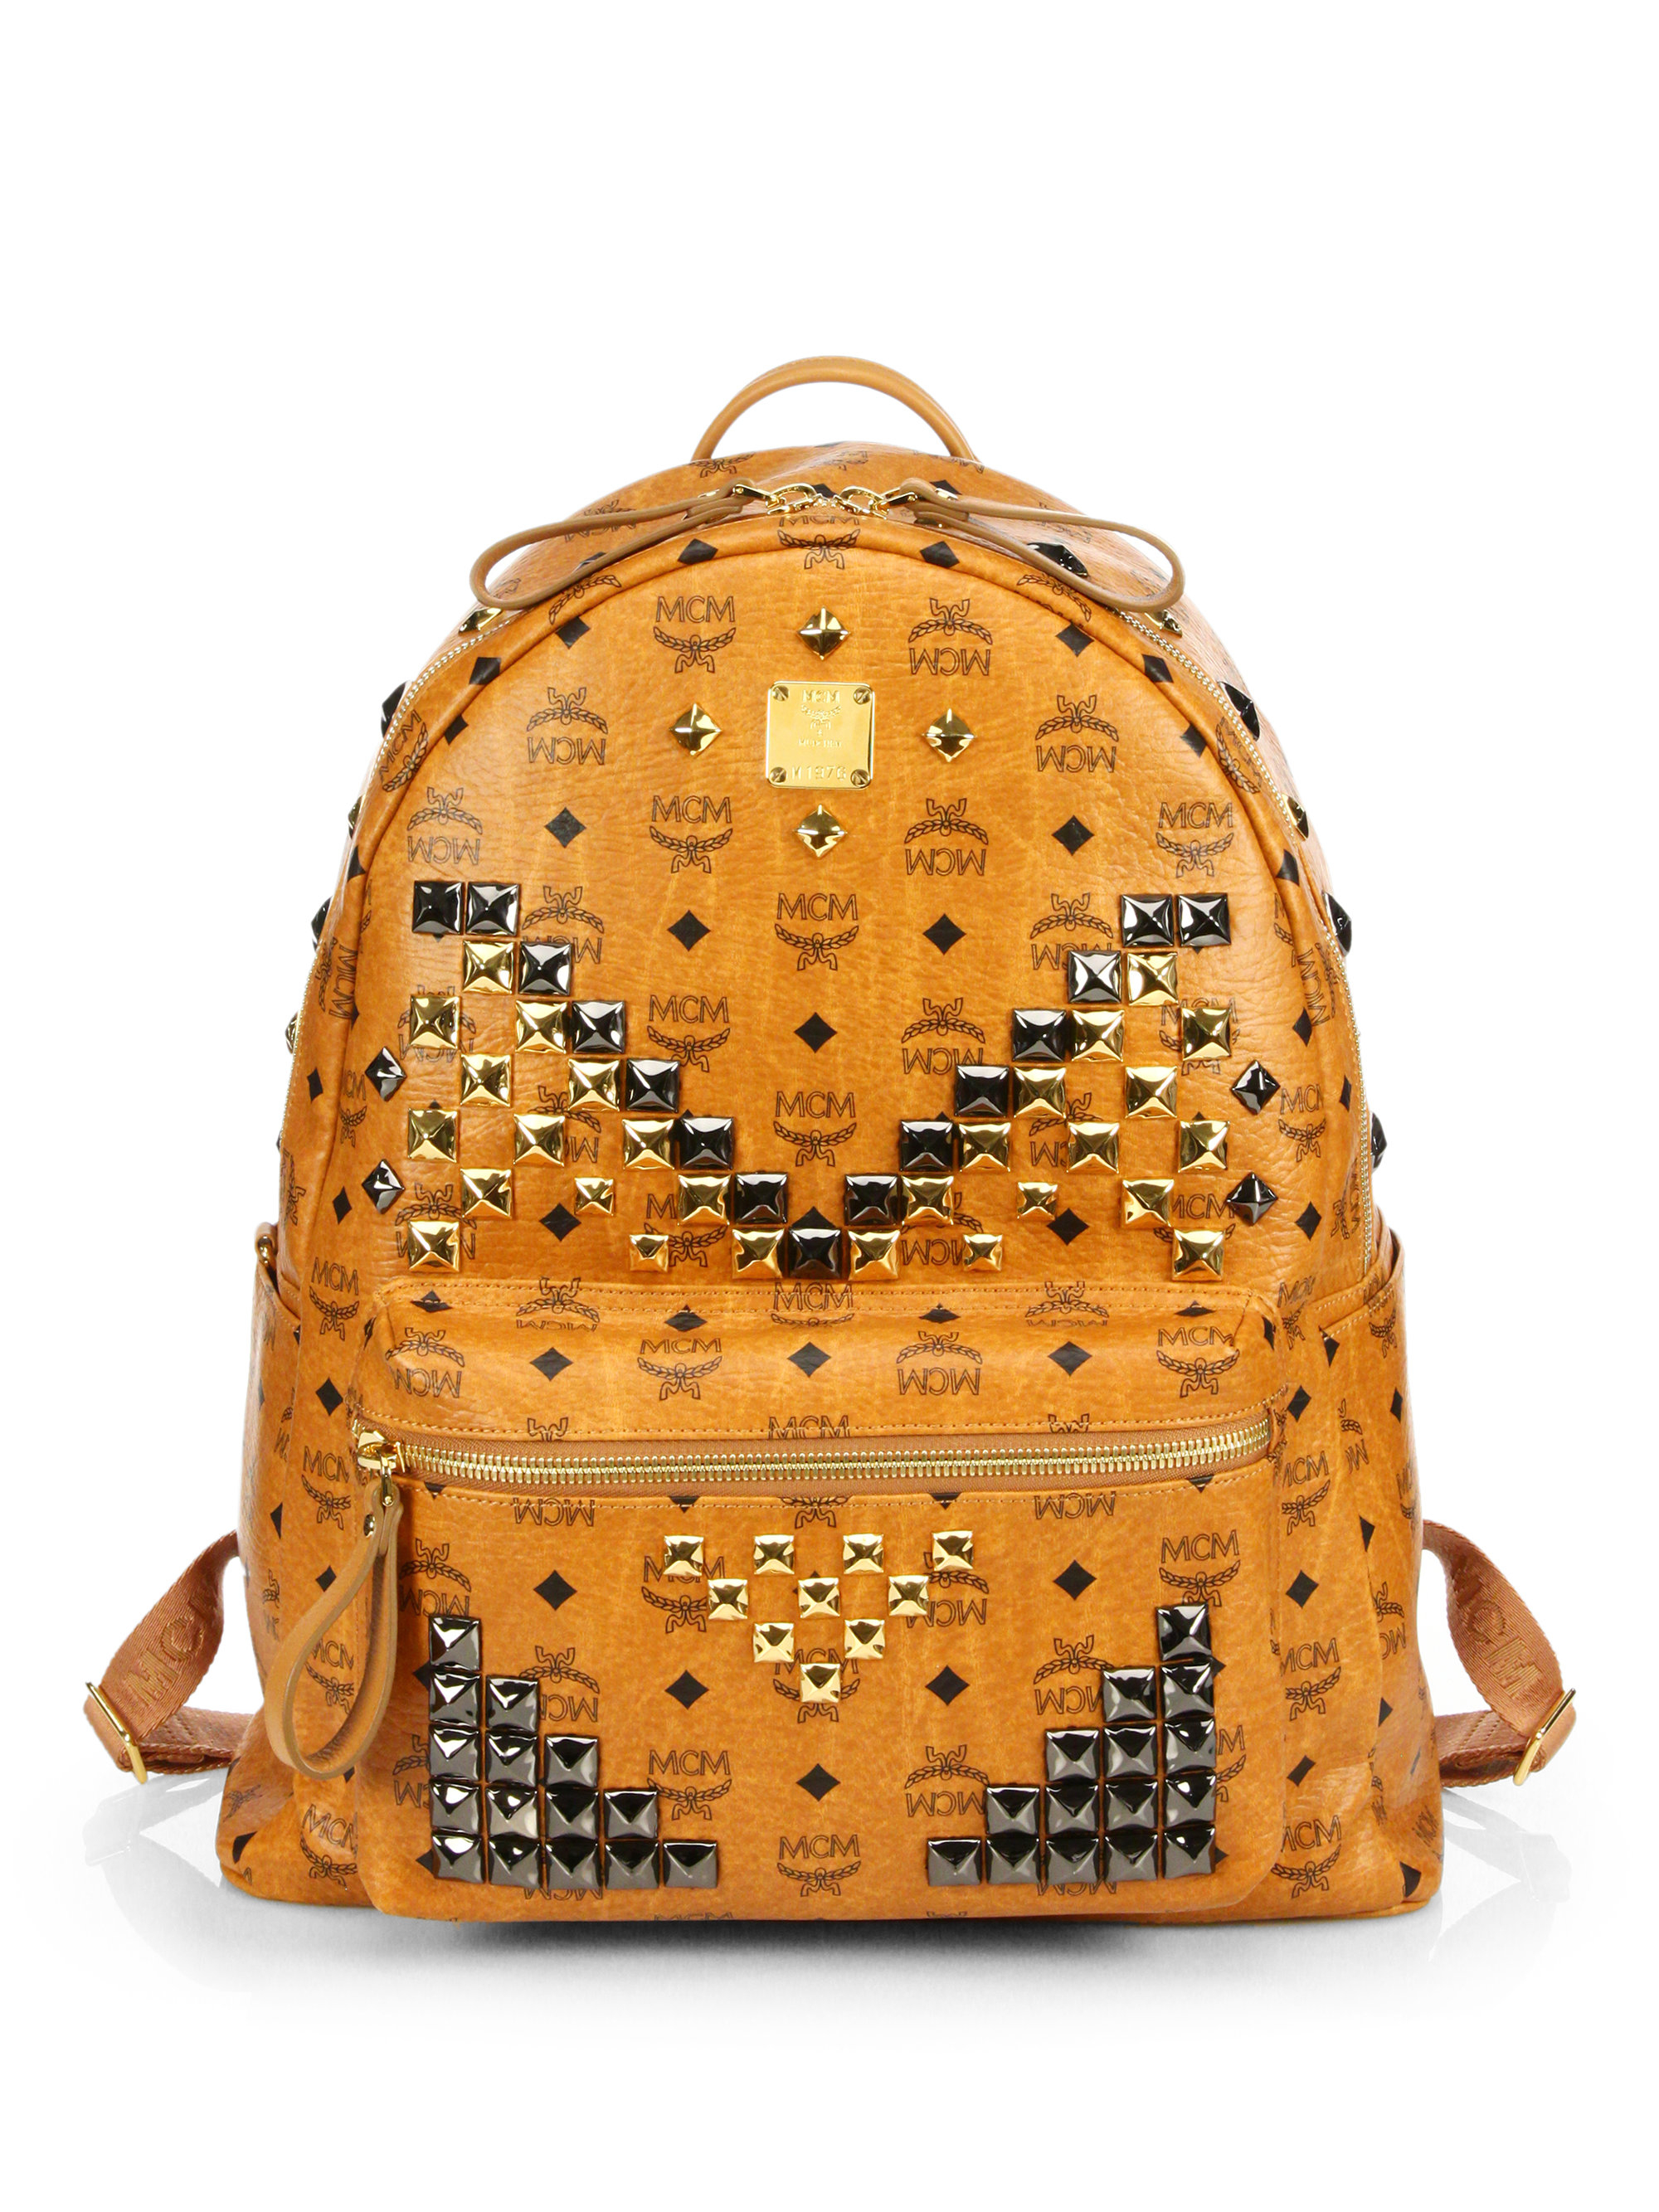 Lyst - Mcm Caviar Leopard Stud Medium Backpack in Brown for Men